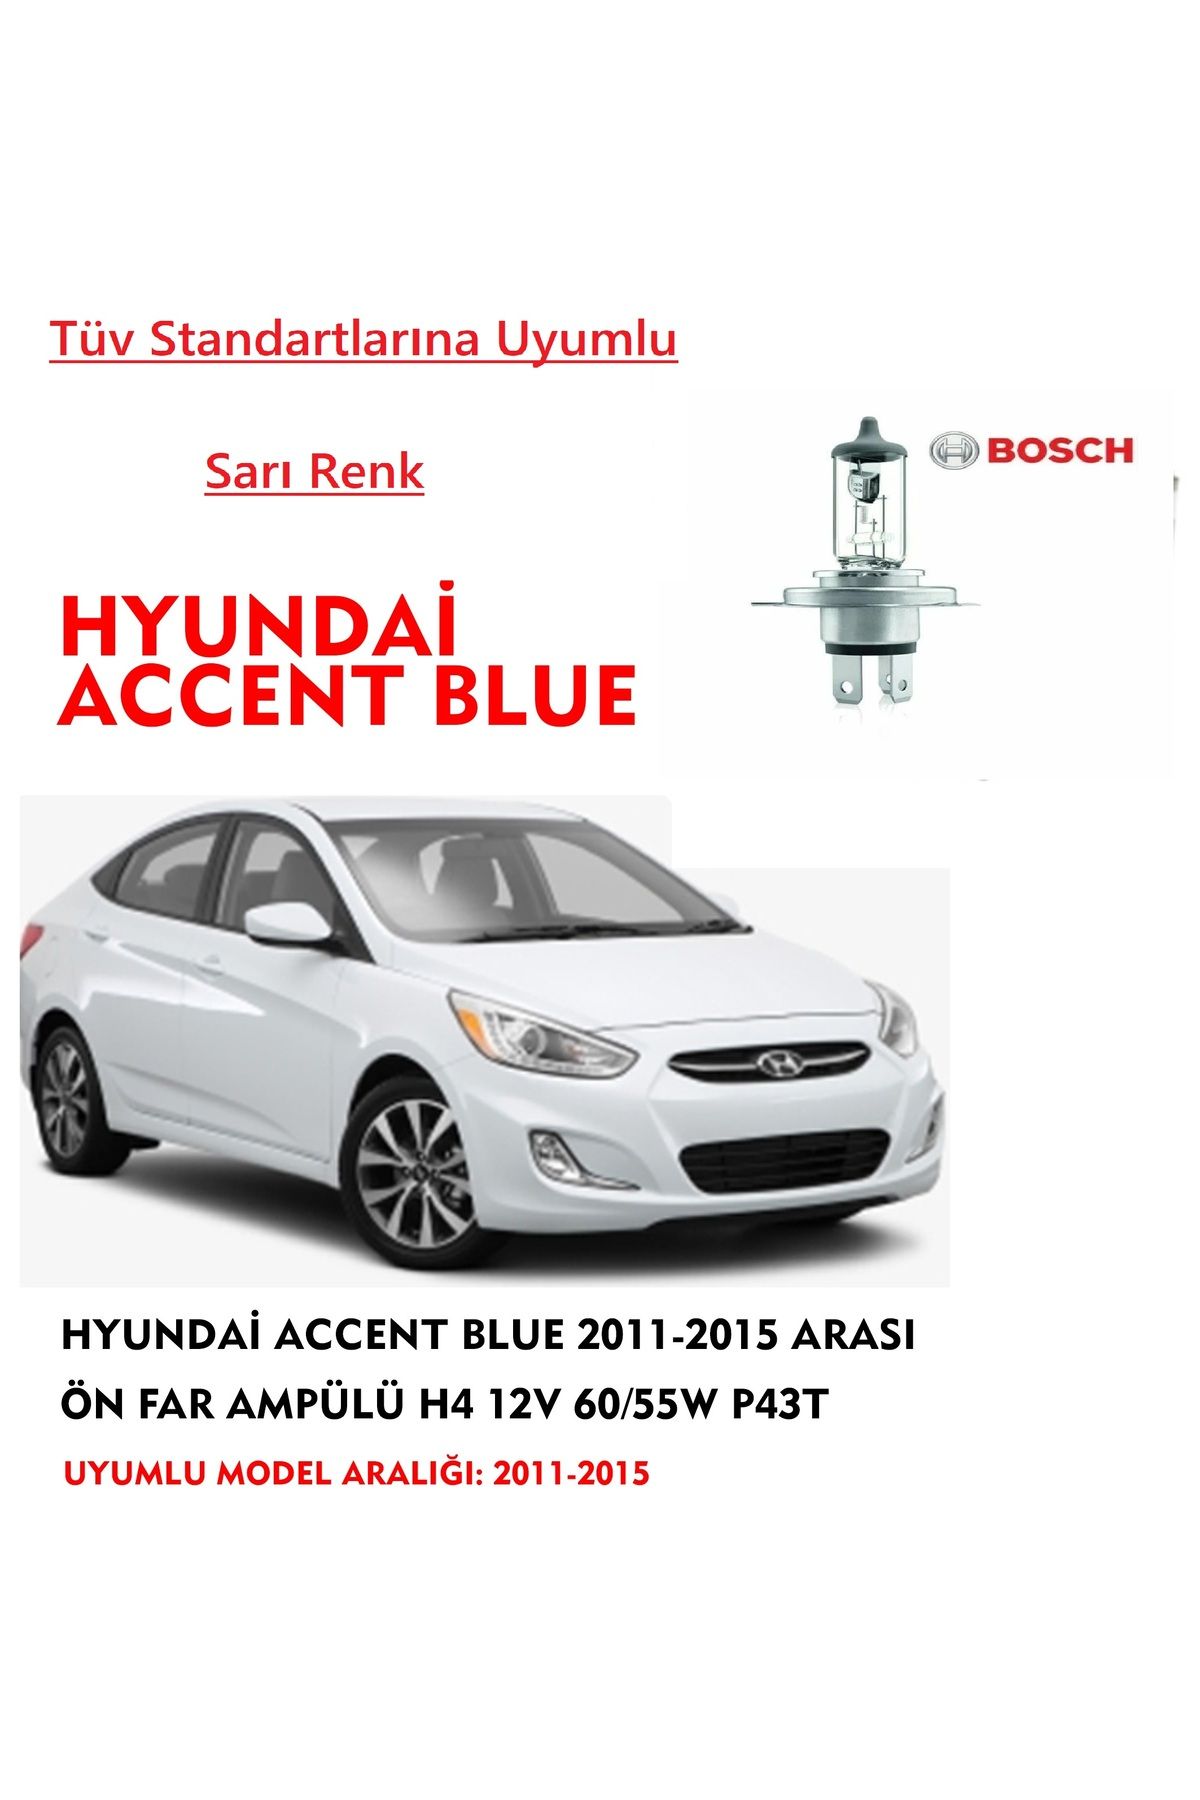 Bosch Hyundai Accent Blue 2011-2015 Uyumlu Arası Ön Far Ampülü Sarı Renk 60/55w